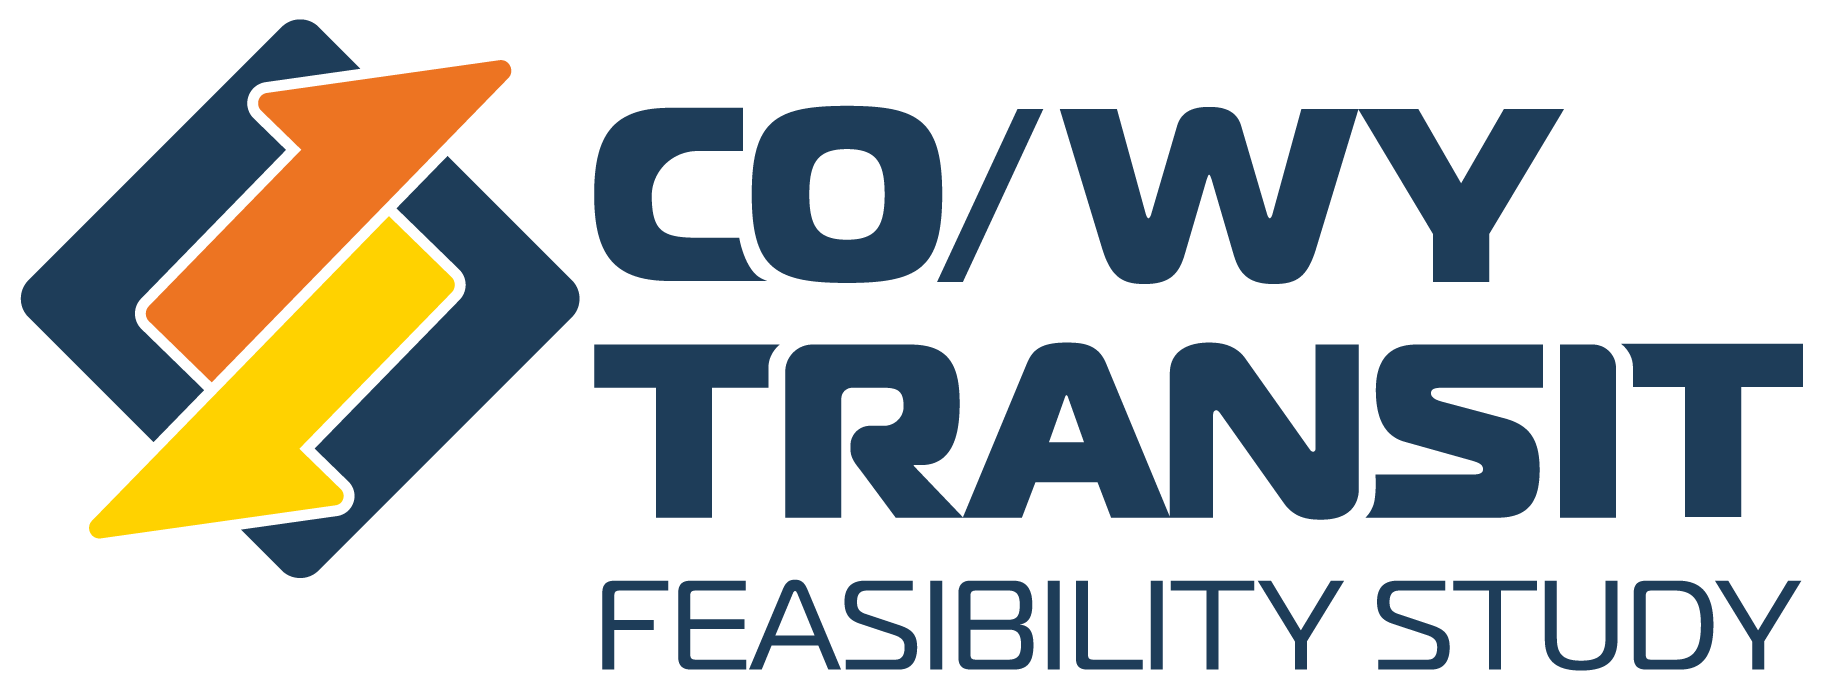 Colorado Wyoming Transit Feasibility Study Logo